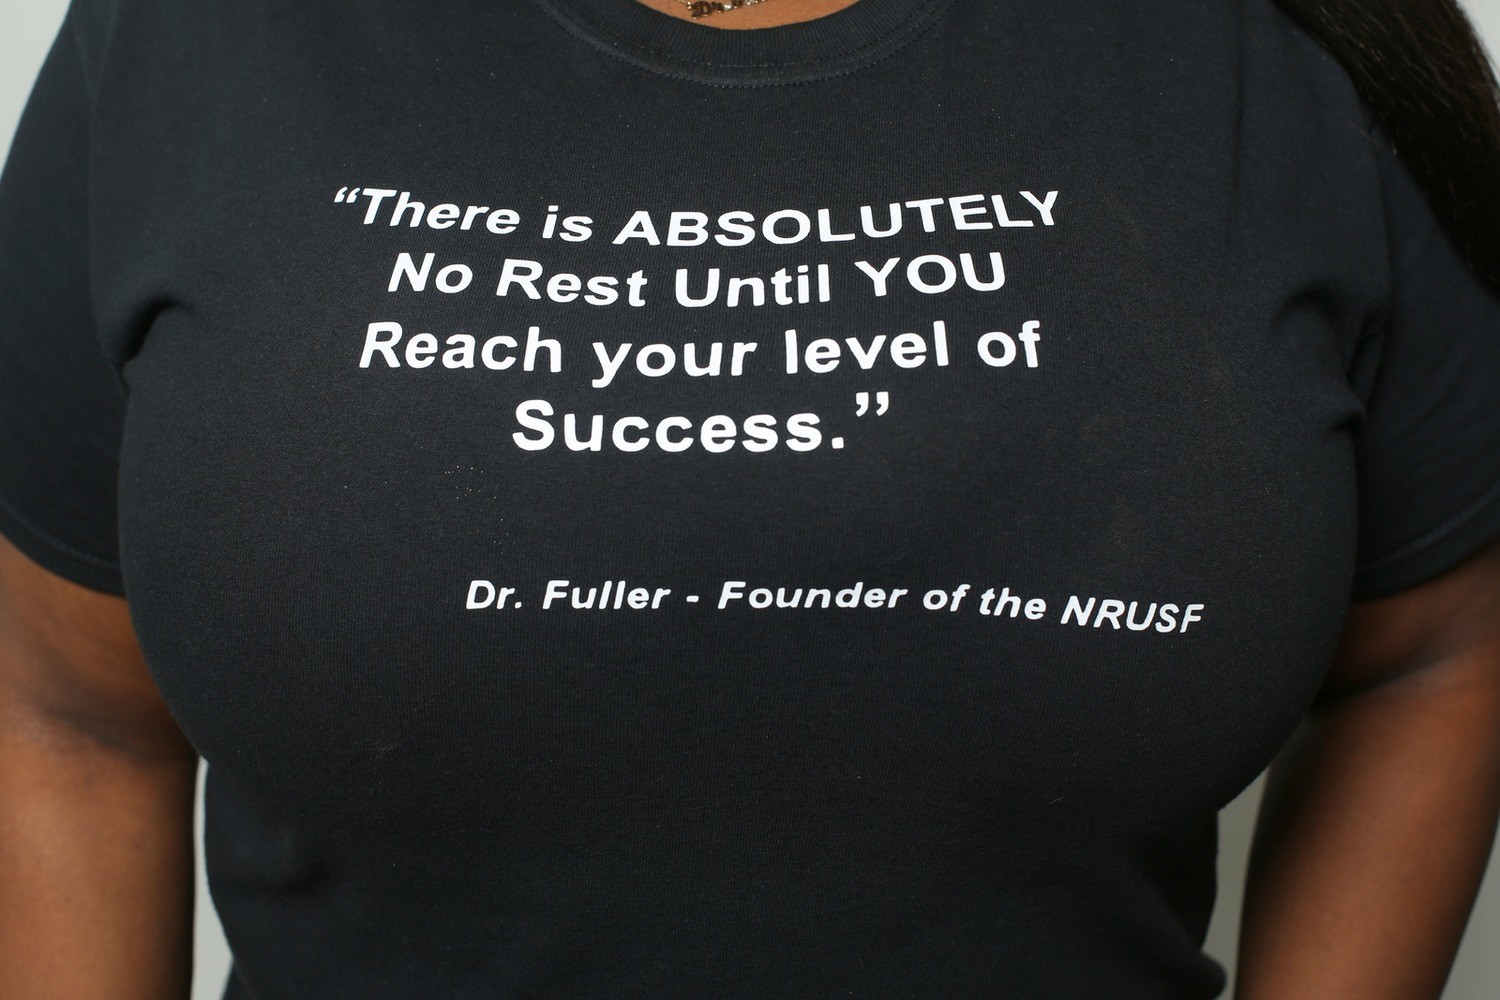 The "Dr. Fuller" T-shirt